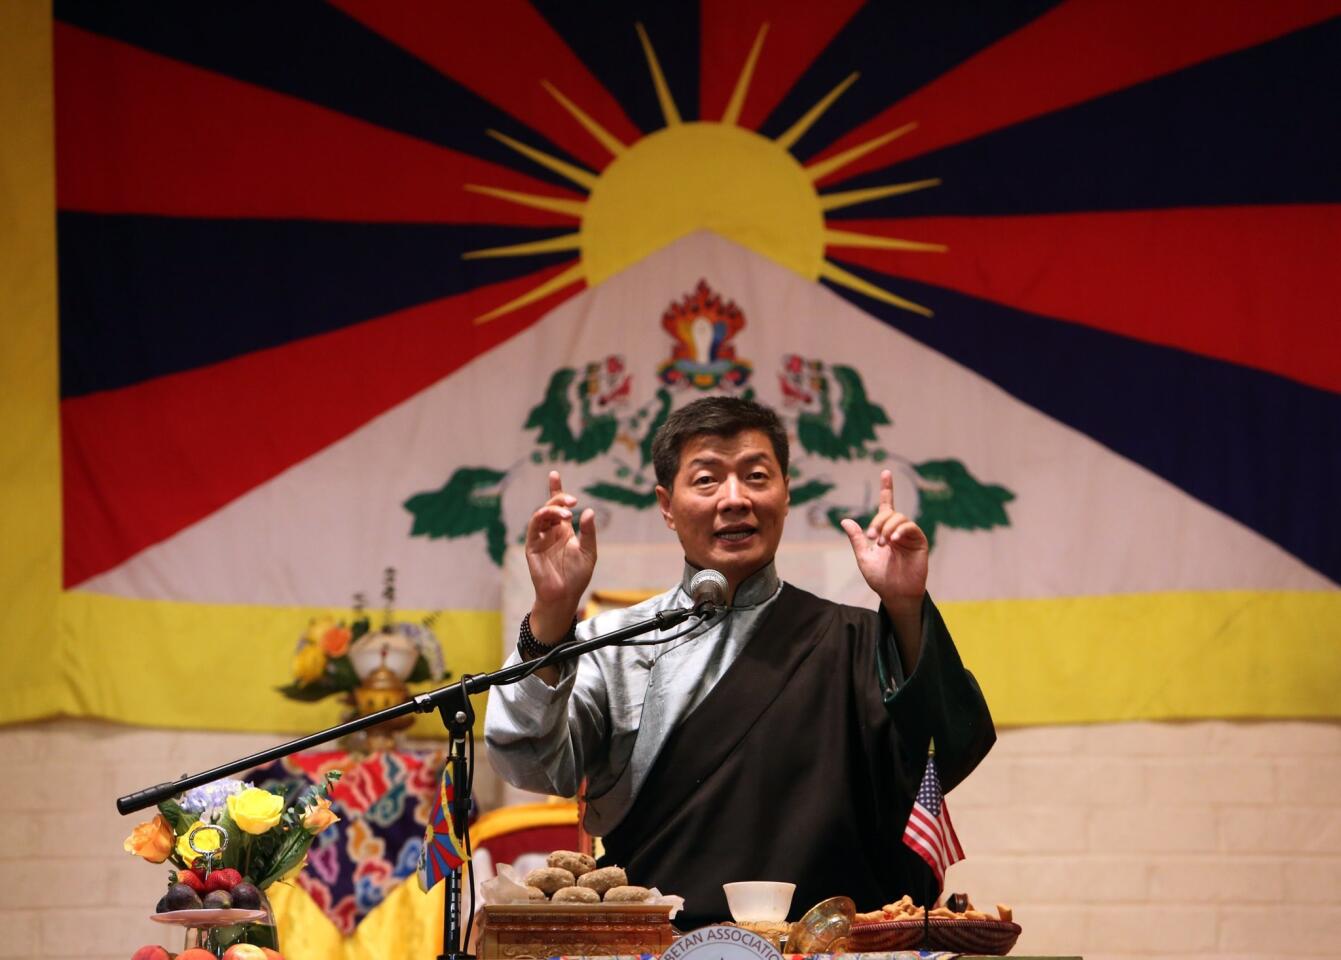 Speaking to the Tibetan community